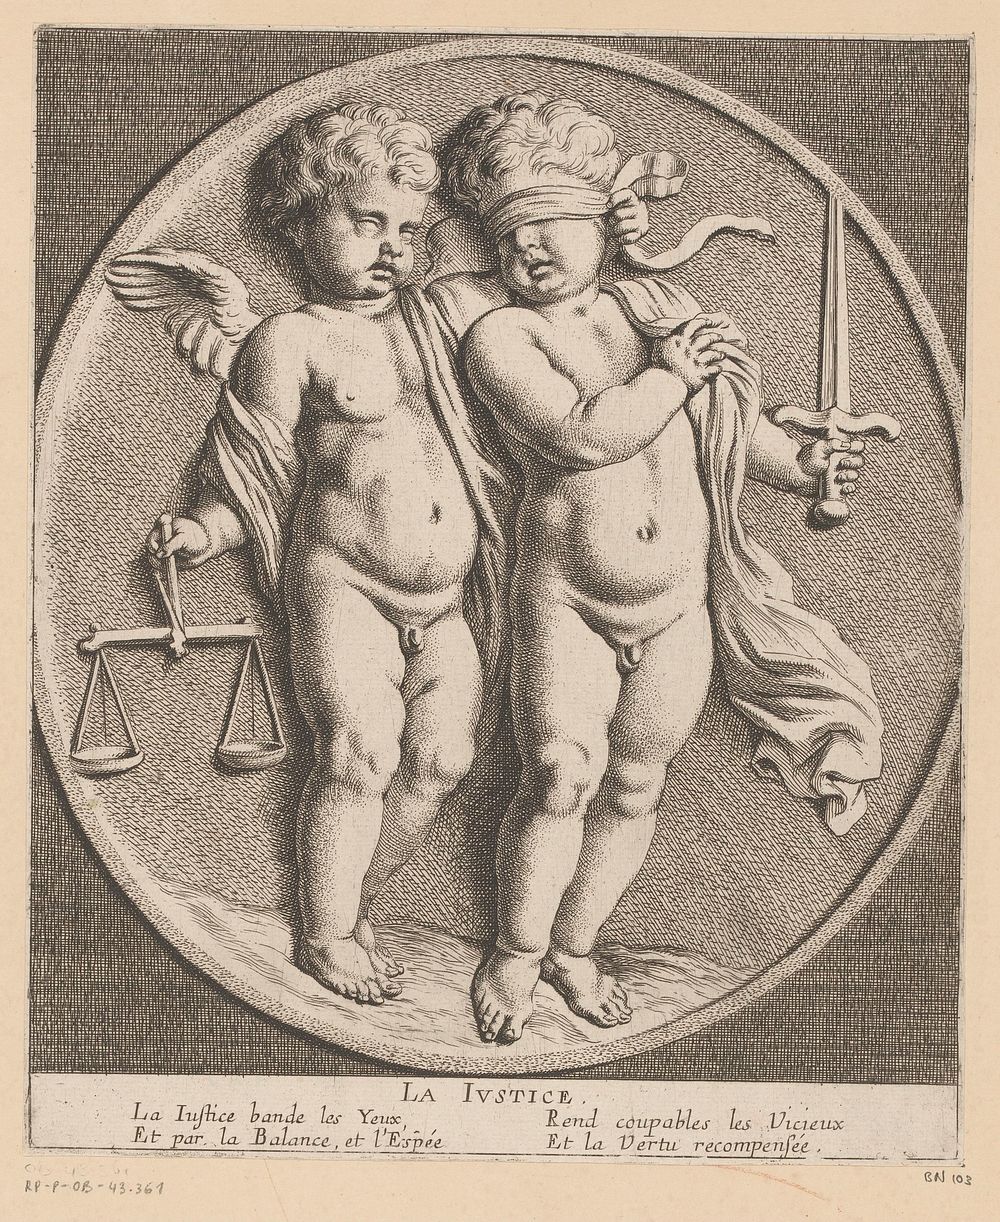 Twee putti met attributen van Justitia (1654) by Louis Ferdinand I Elle, Gerard van Opstal, Tetelin, Jacques van Merlen and…